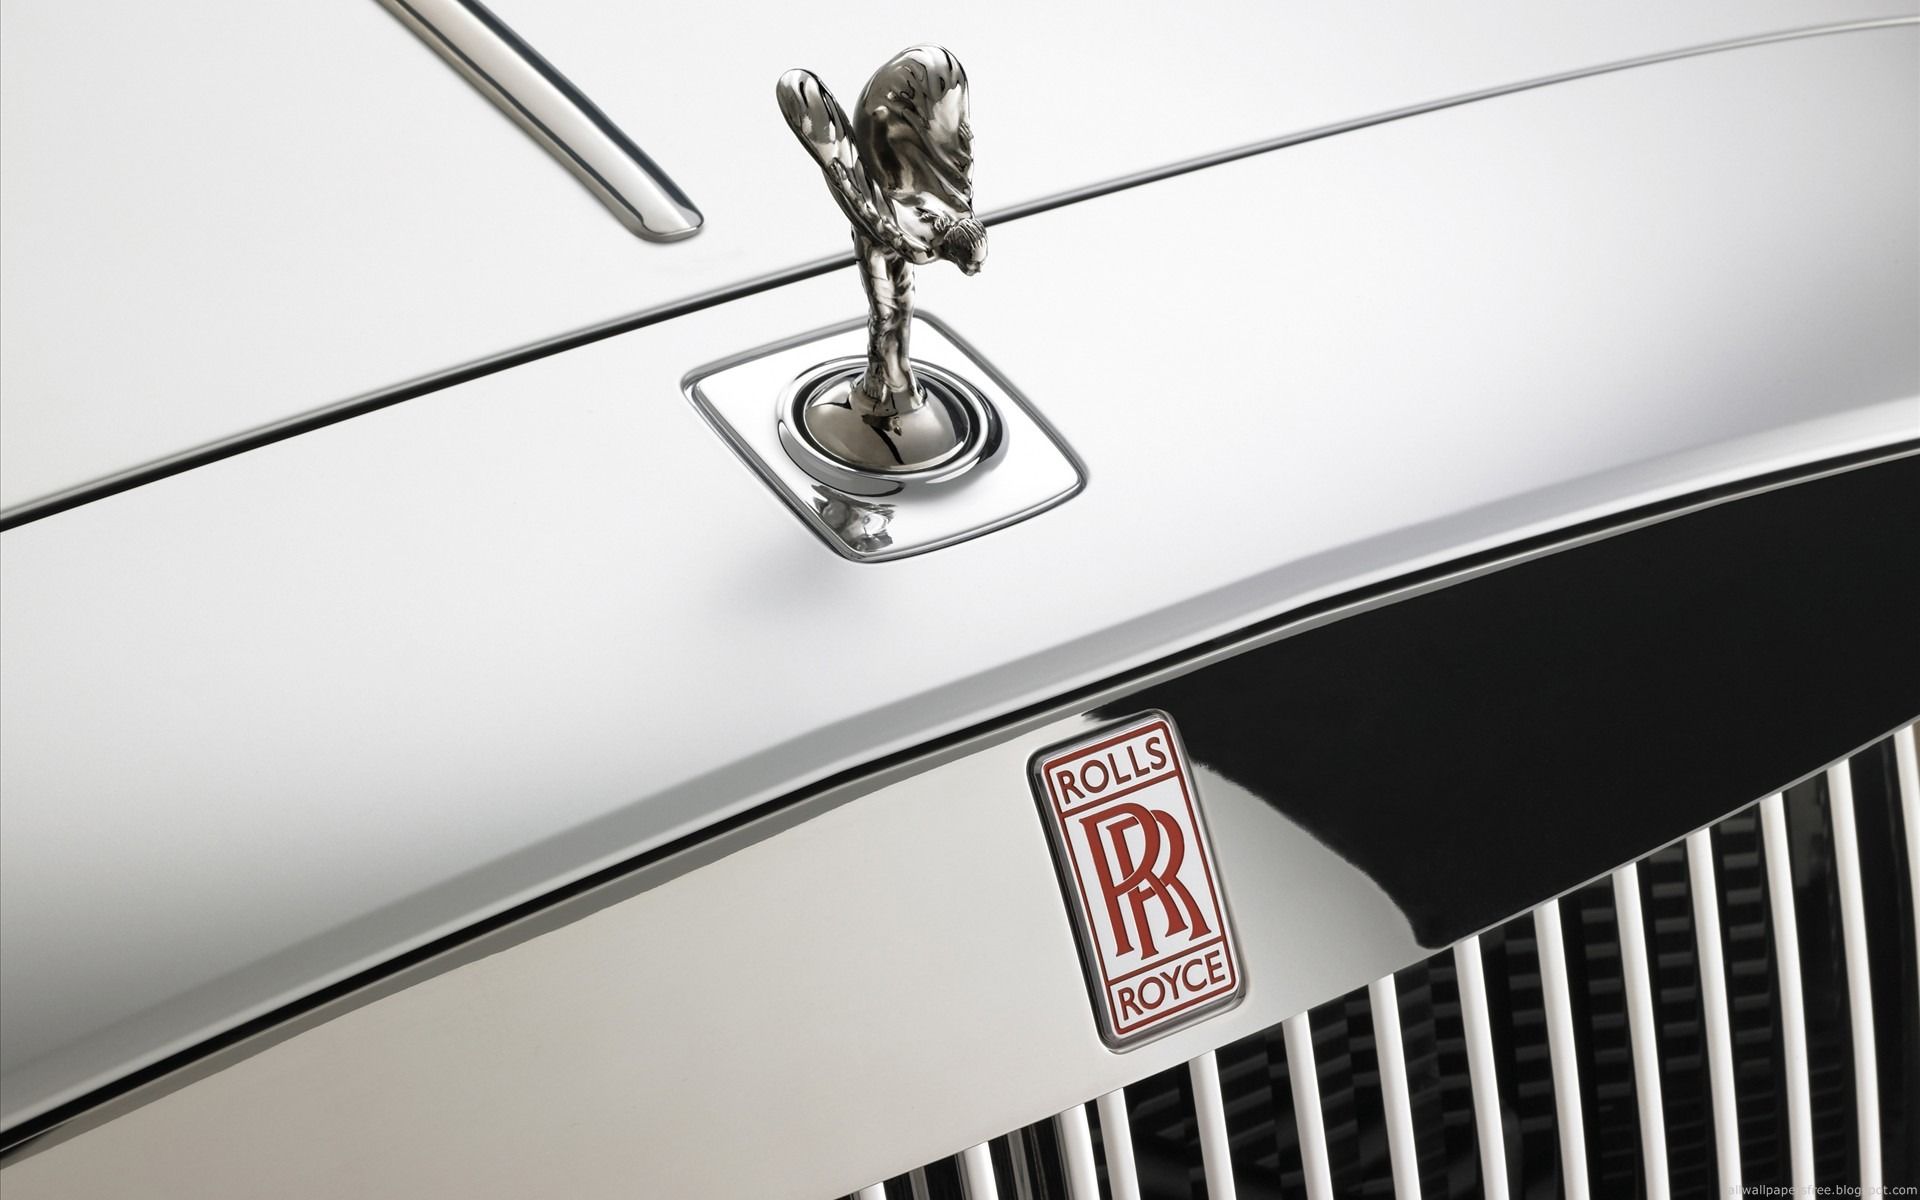 Rolls Royce 200EX LOGO wallpapers | Rolls Royce 200EX LOGO stock ...